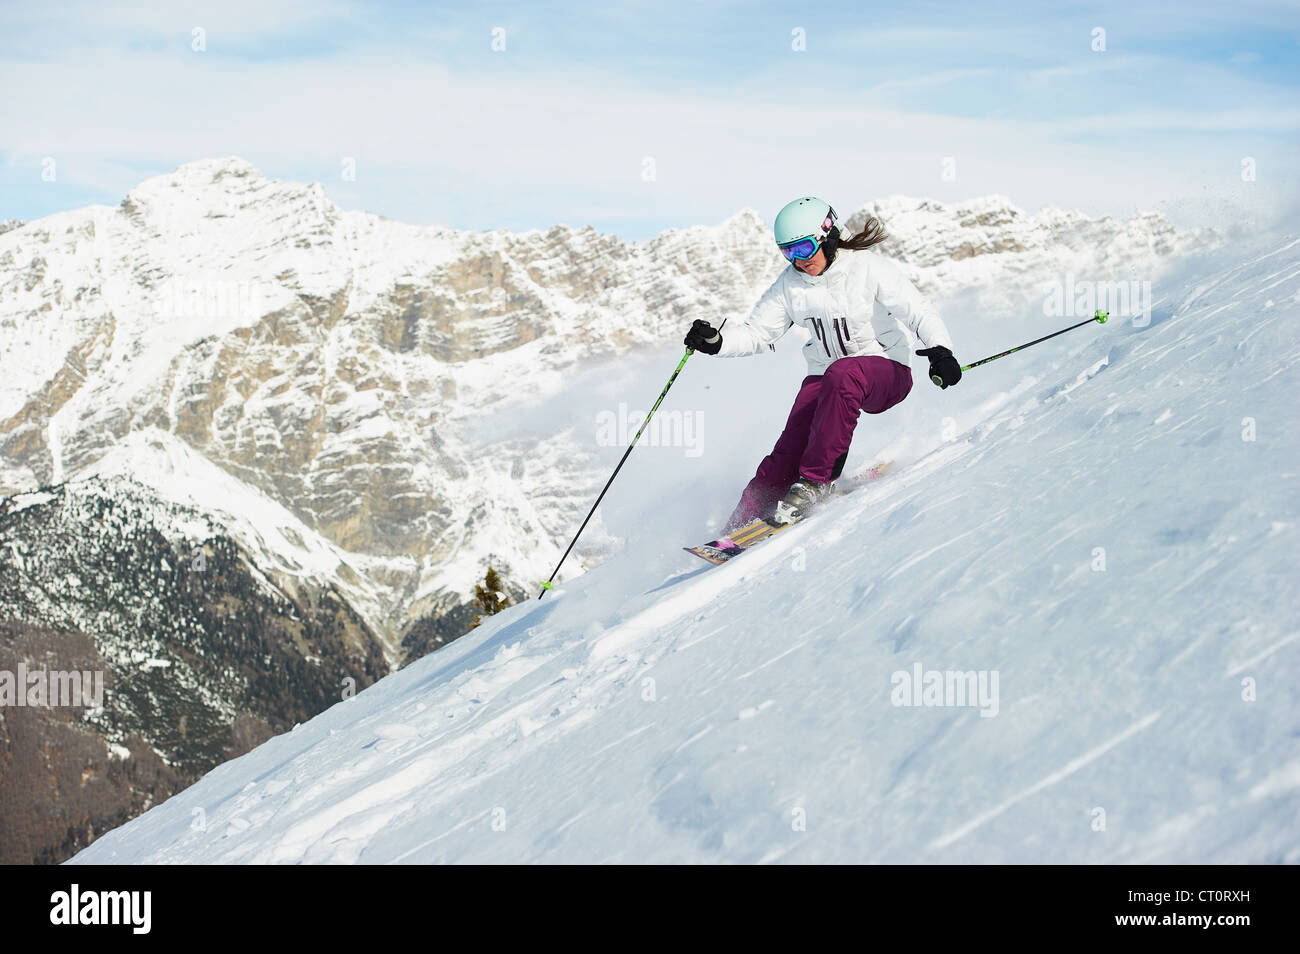 Skier skiing on snowy slope Stock Photo